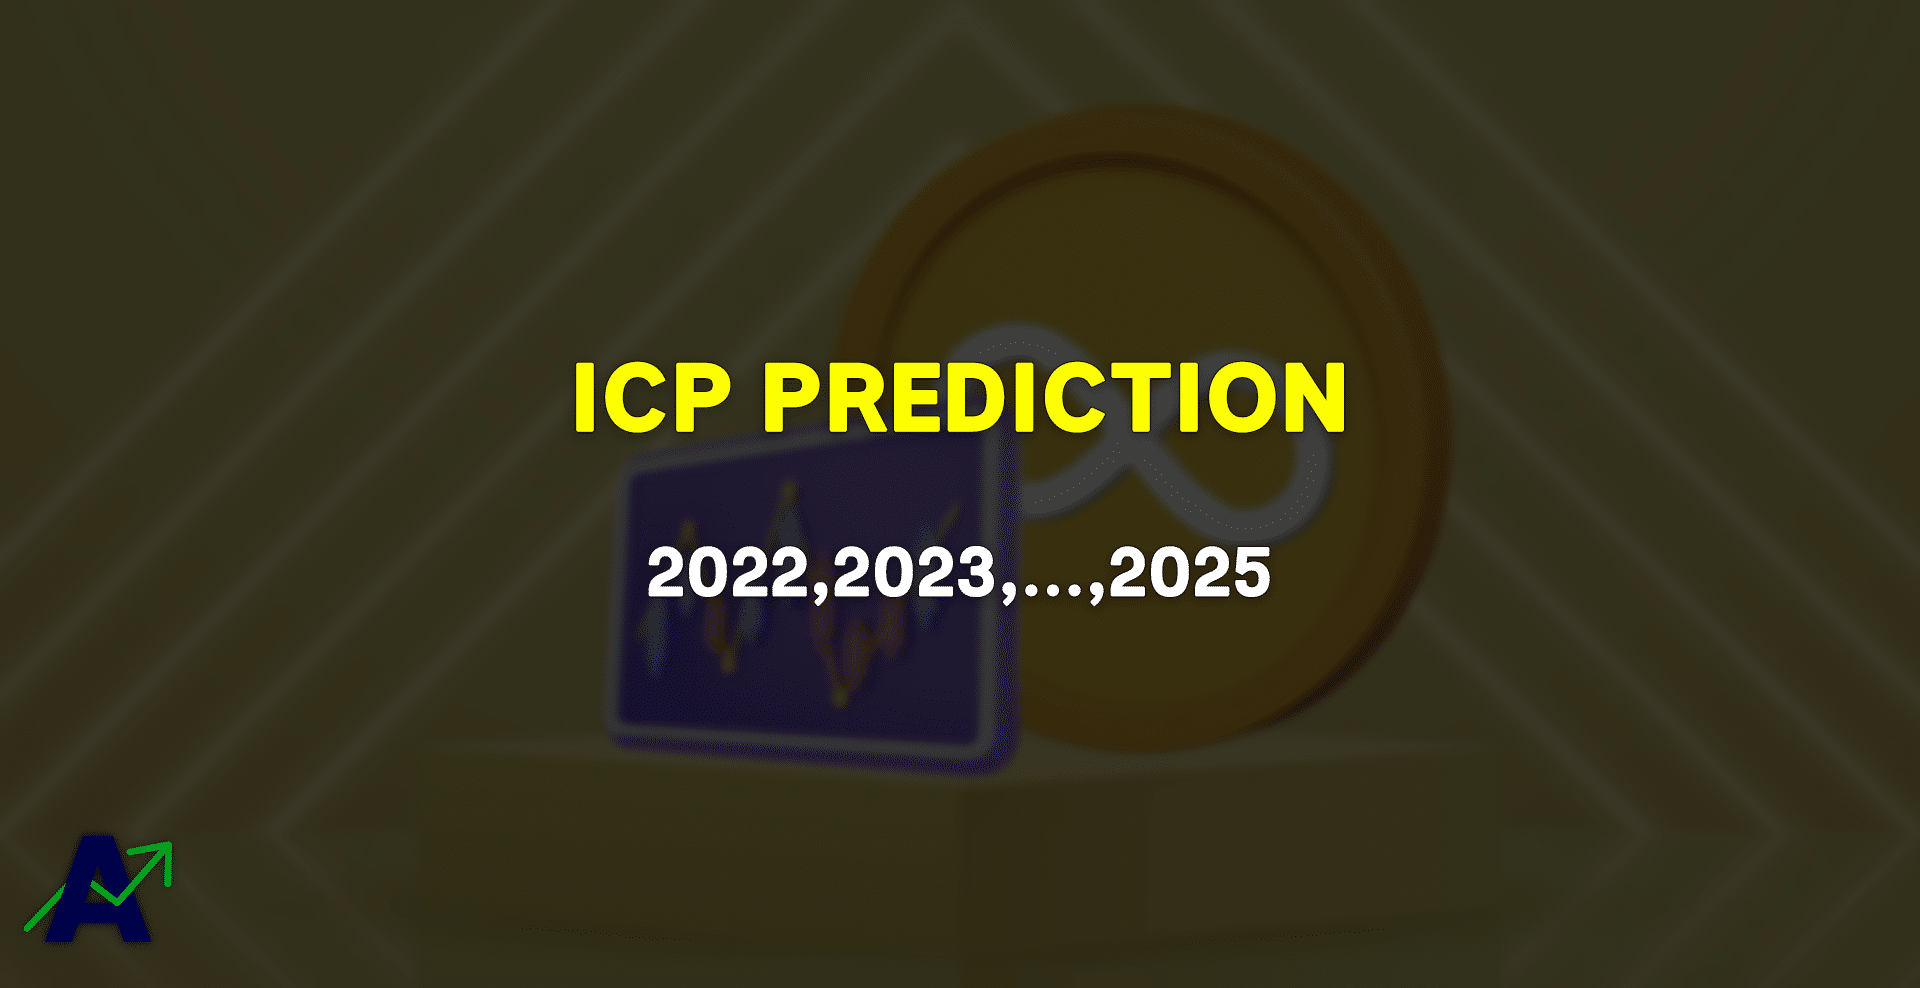 ICP price prediction for 2022, 2023, 2024 & 2025